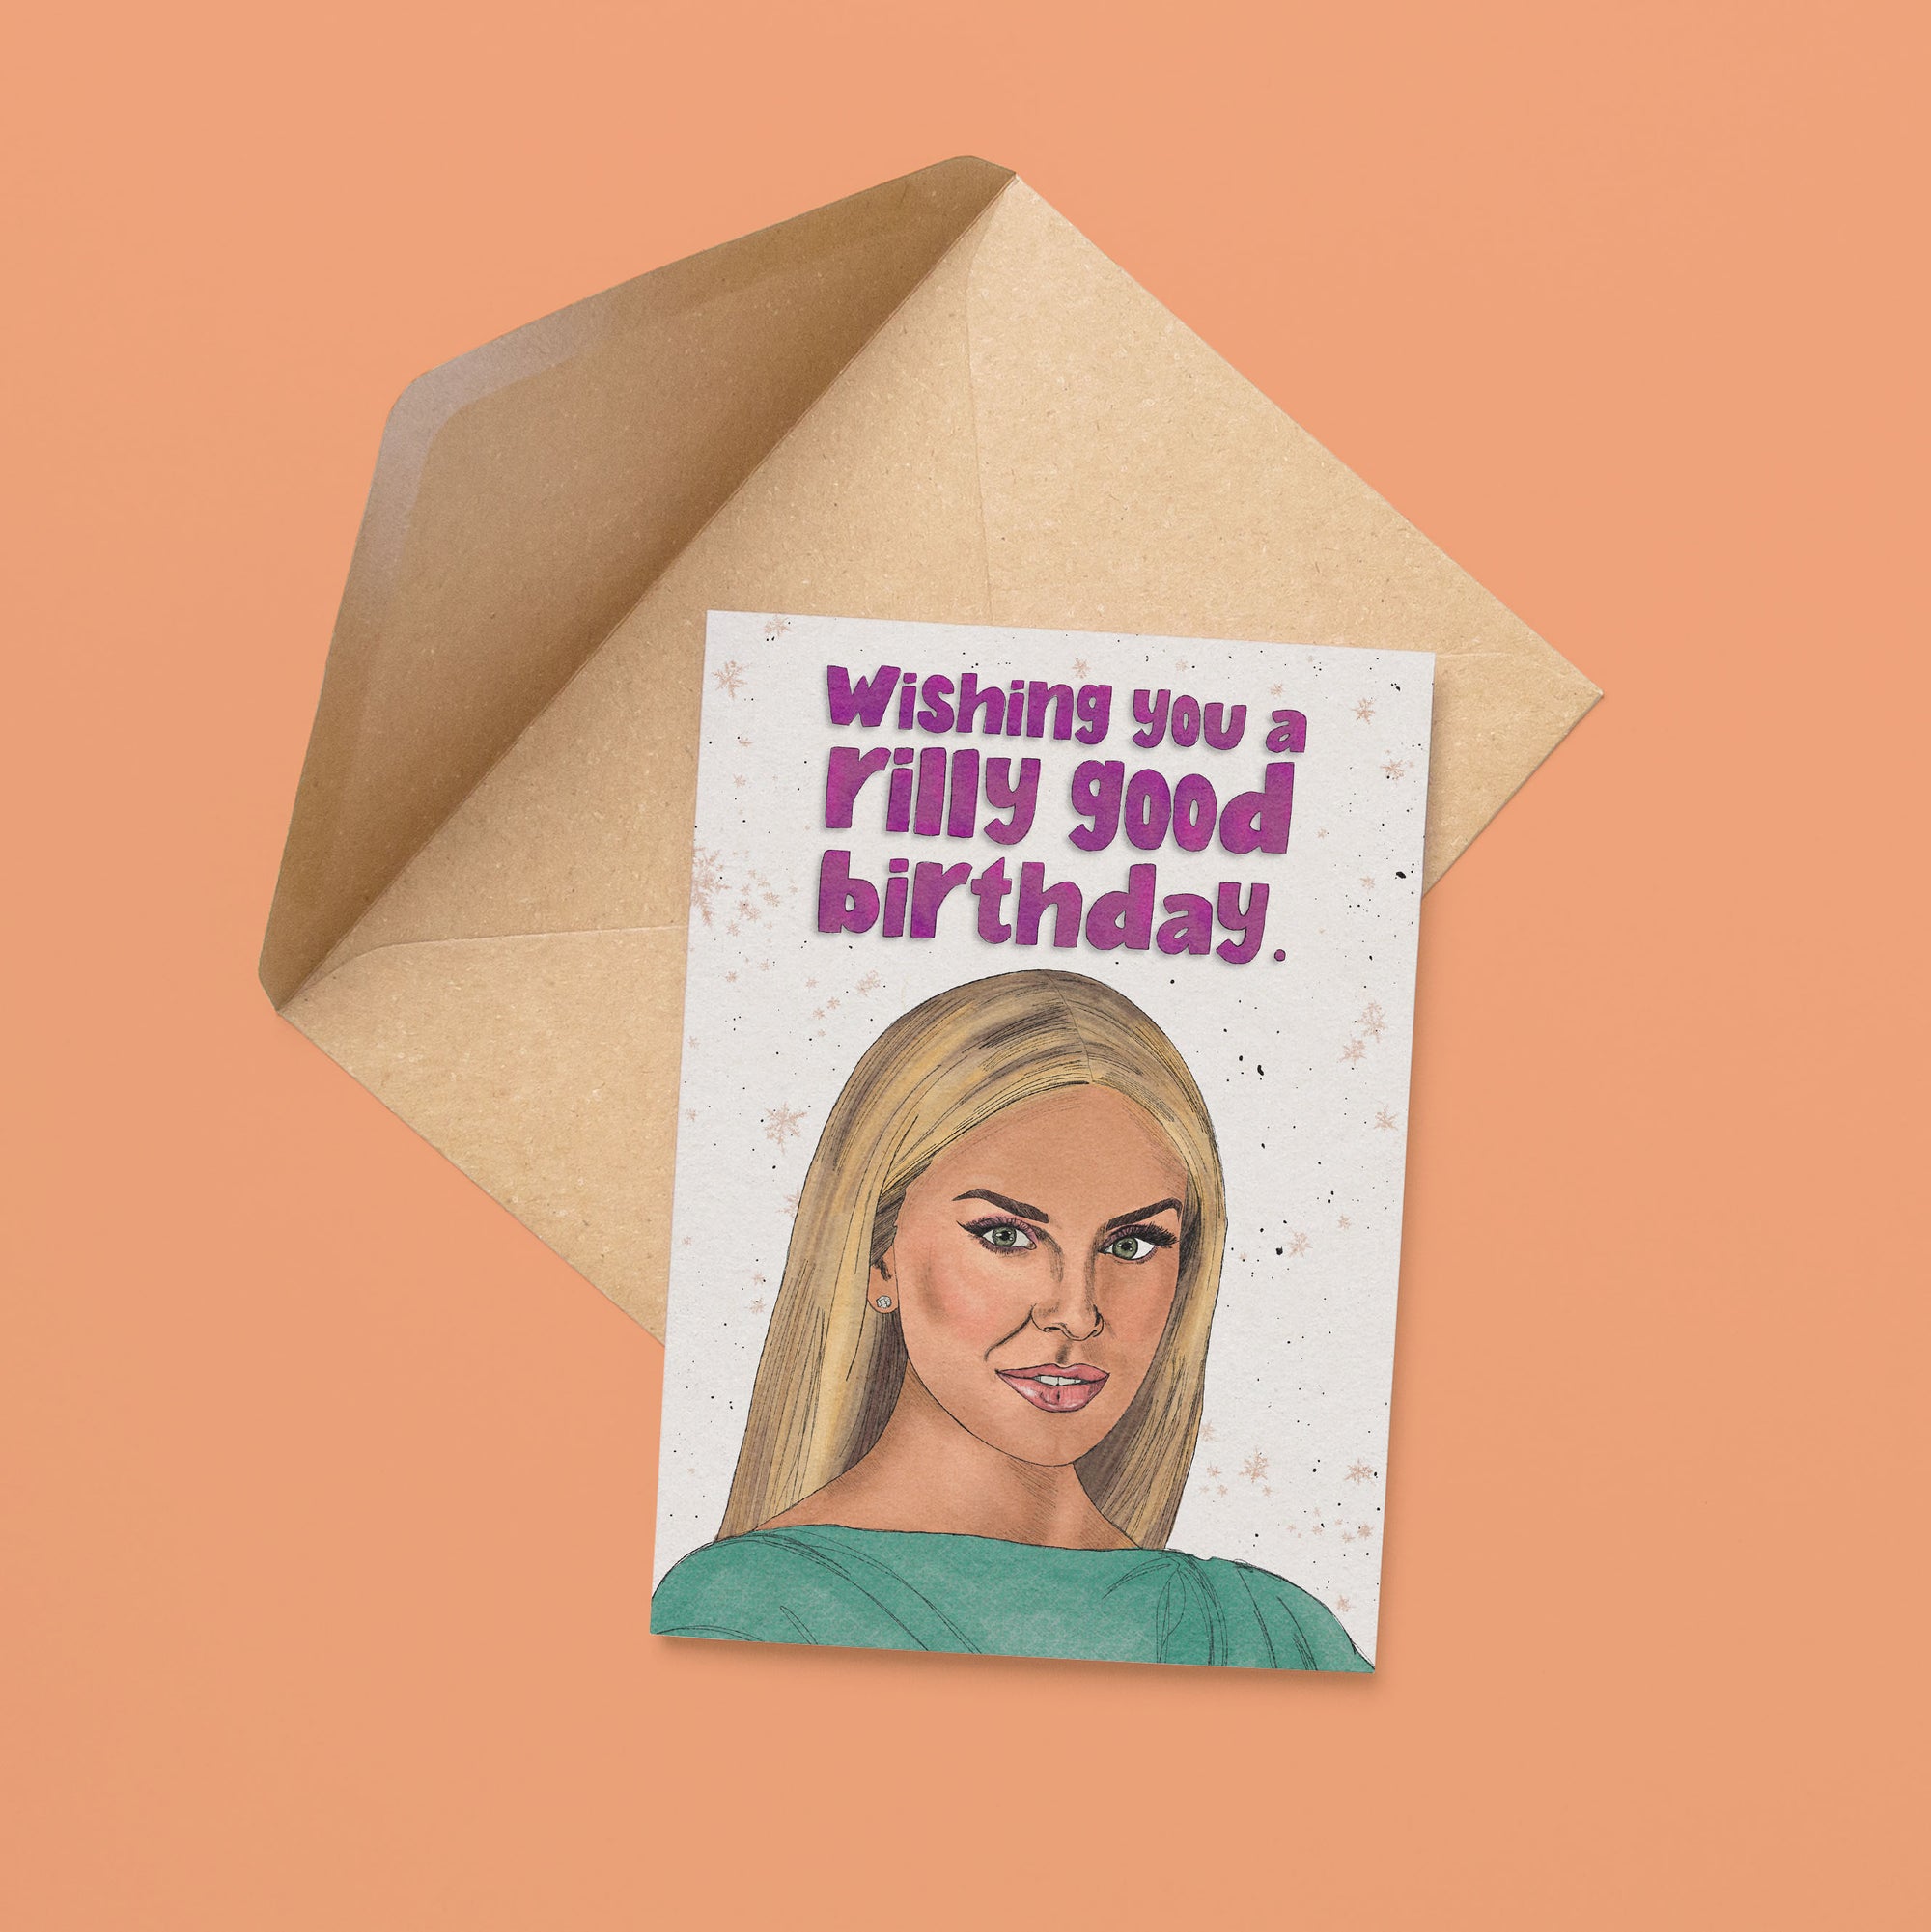 Rilly Good Birthday Card